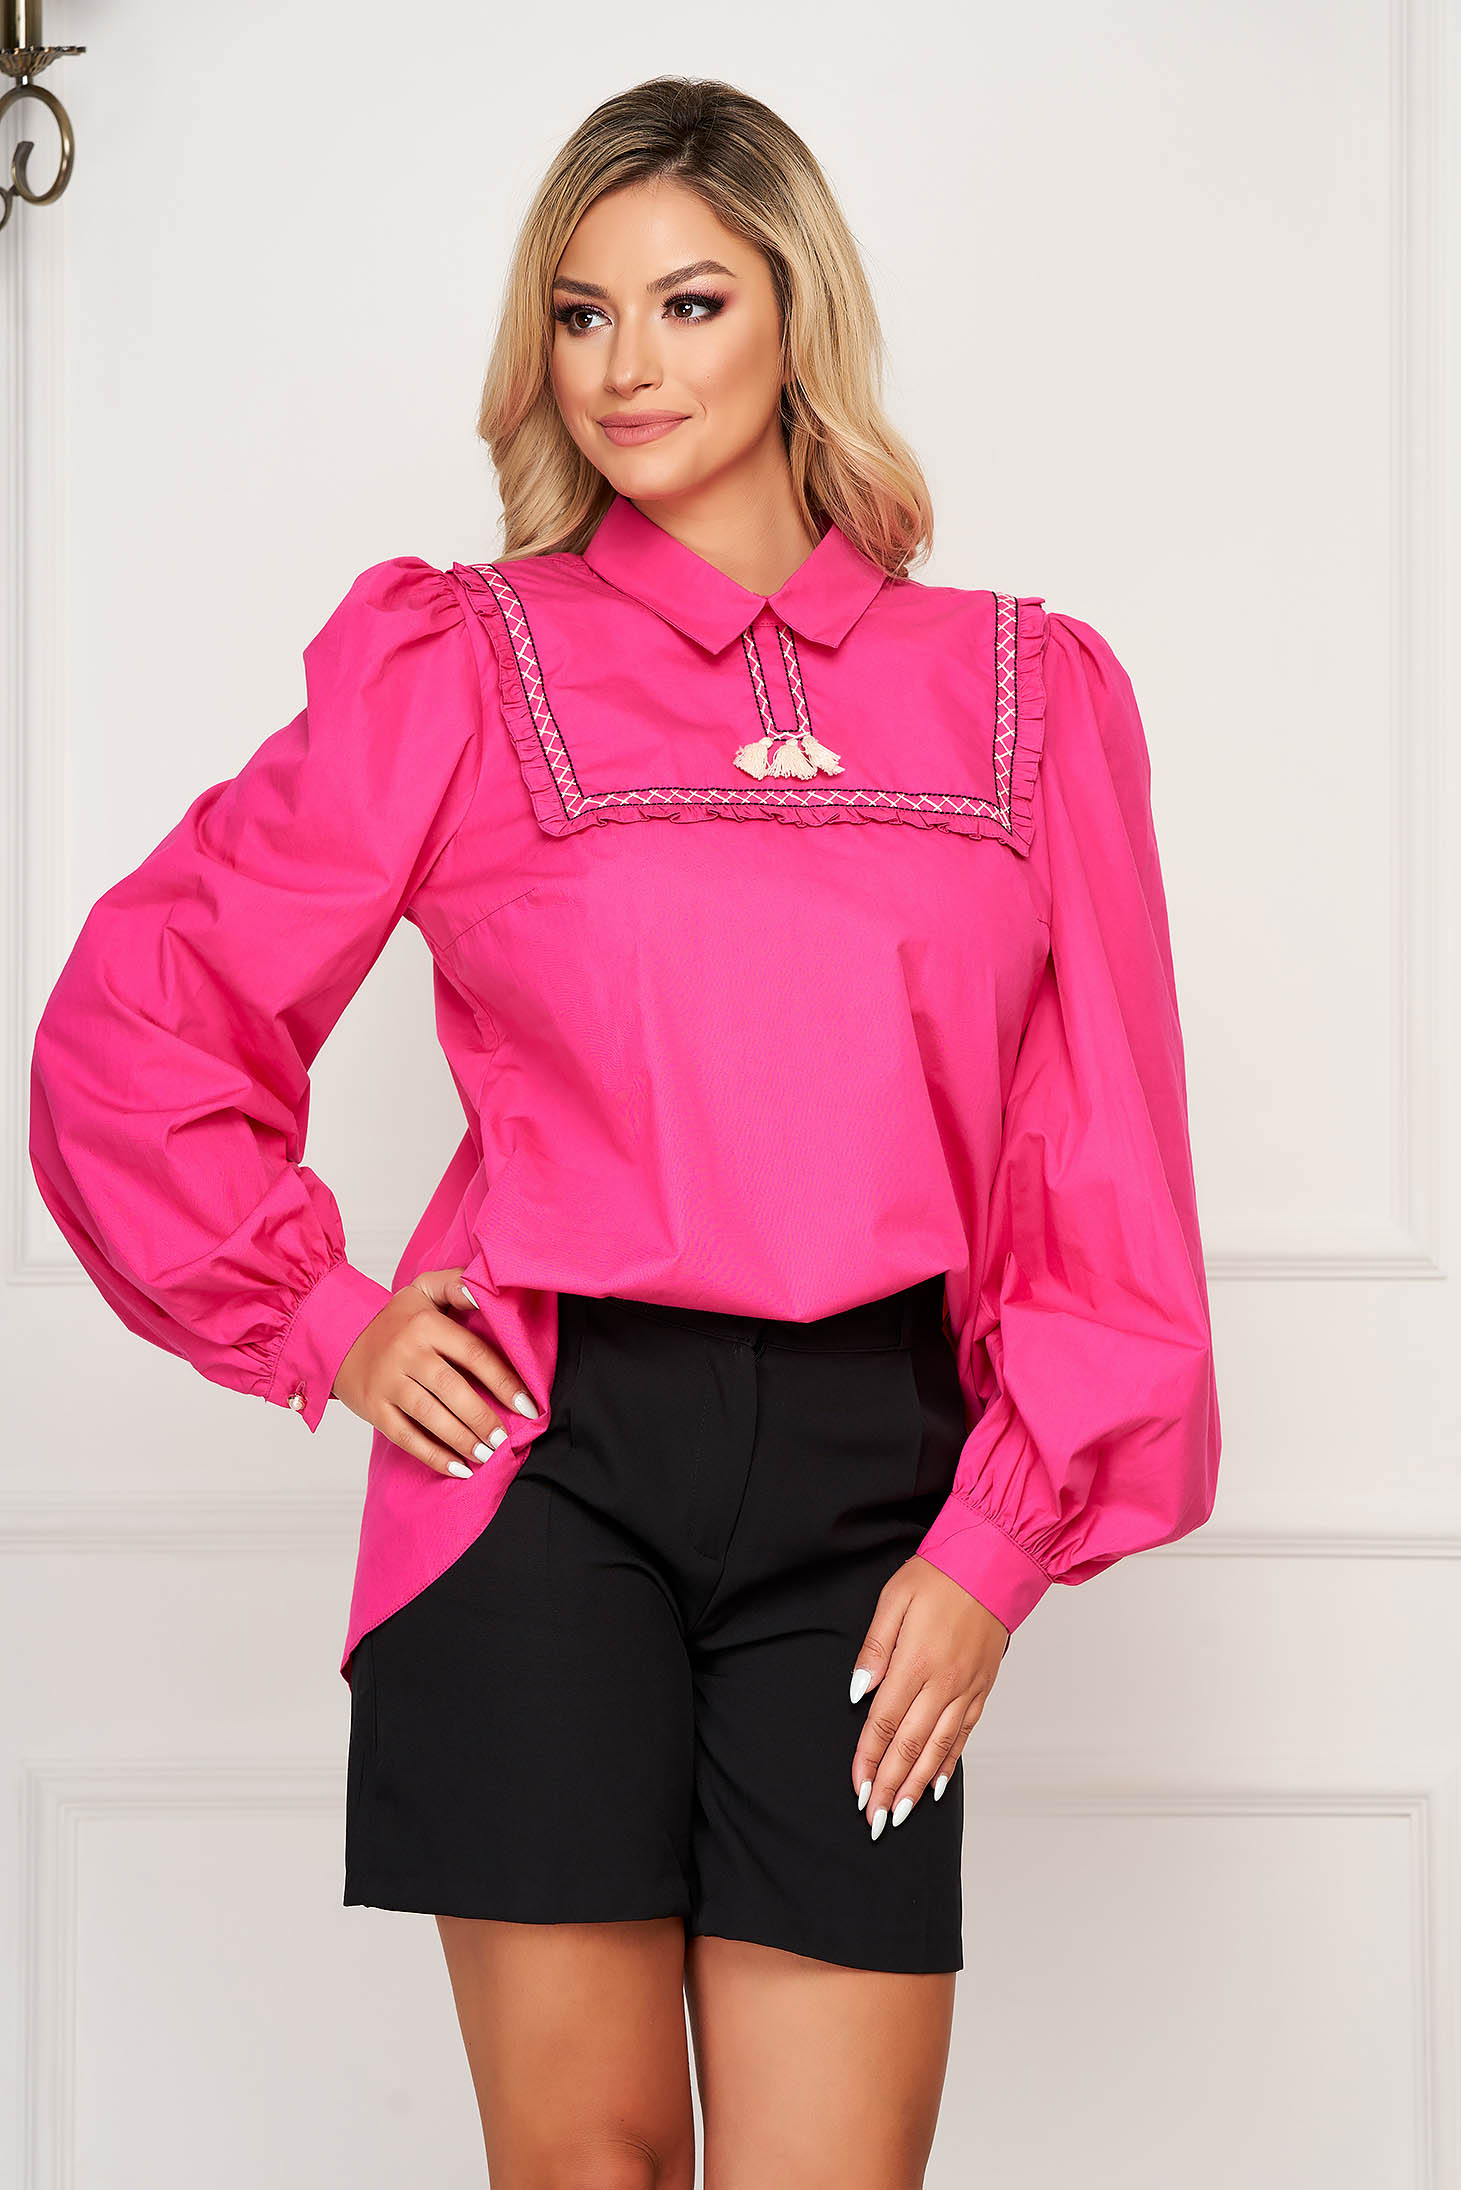 Fashion Casual Long Sleeve T-Shirt Cotton Blouse Tassels Tops Lady Cardigan S-XL